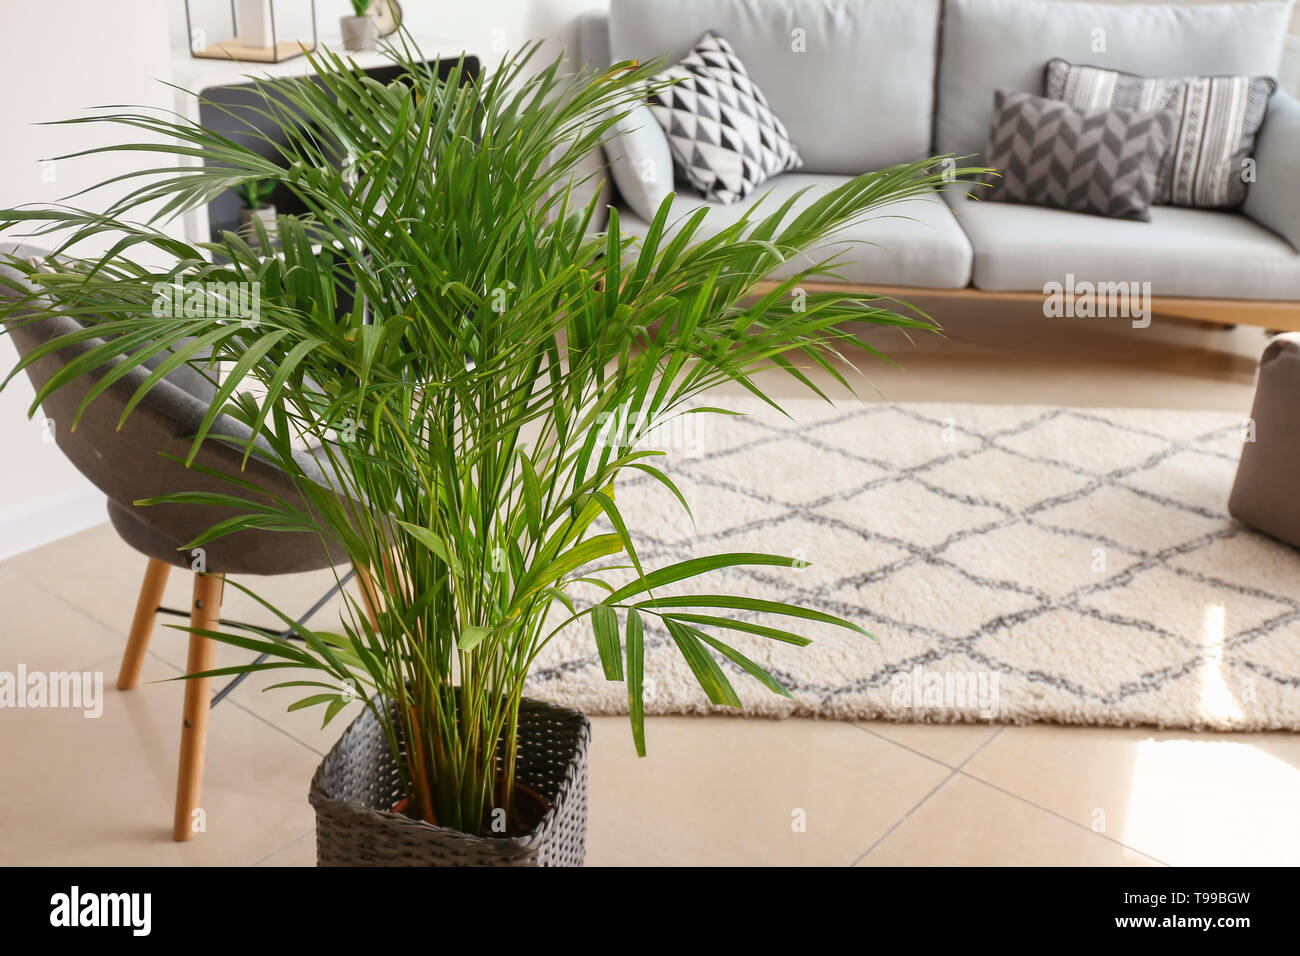 Decorative Areca palm in interior of room Stock Photo